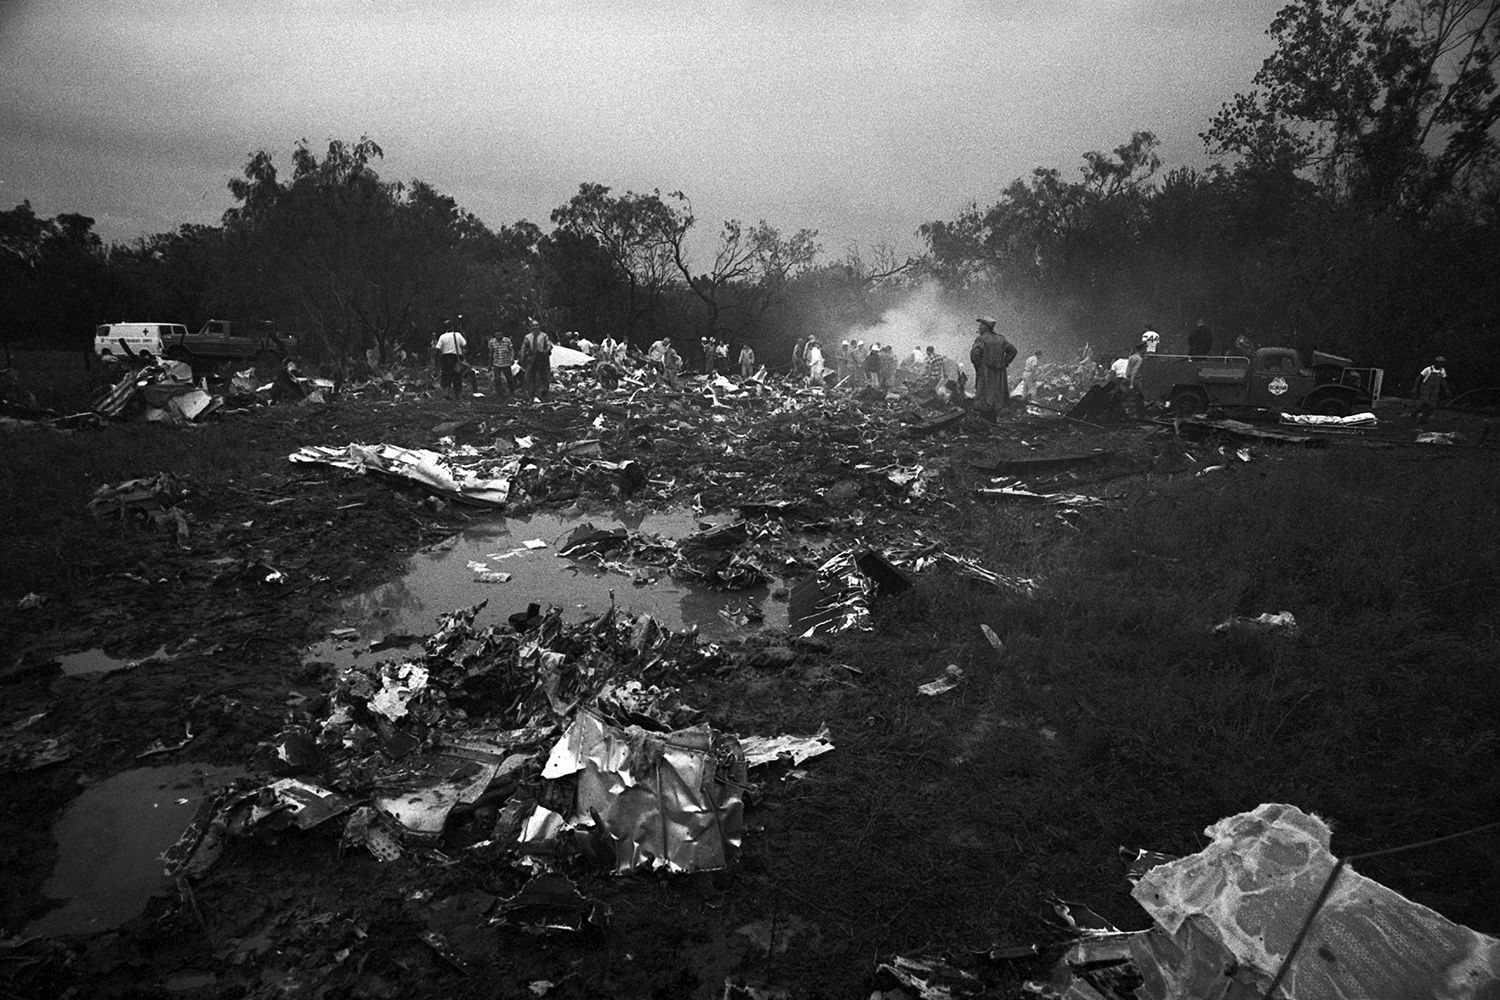 Photo of destruction from a plane crash.